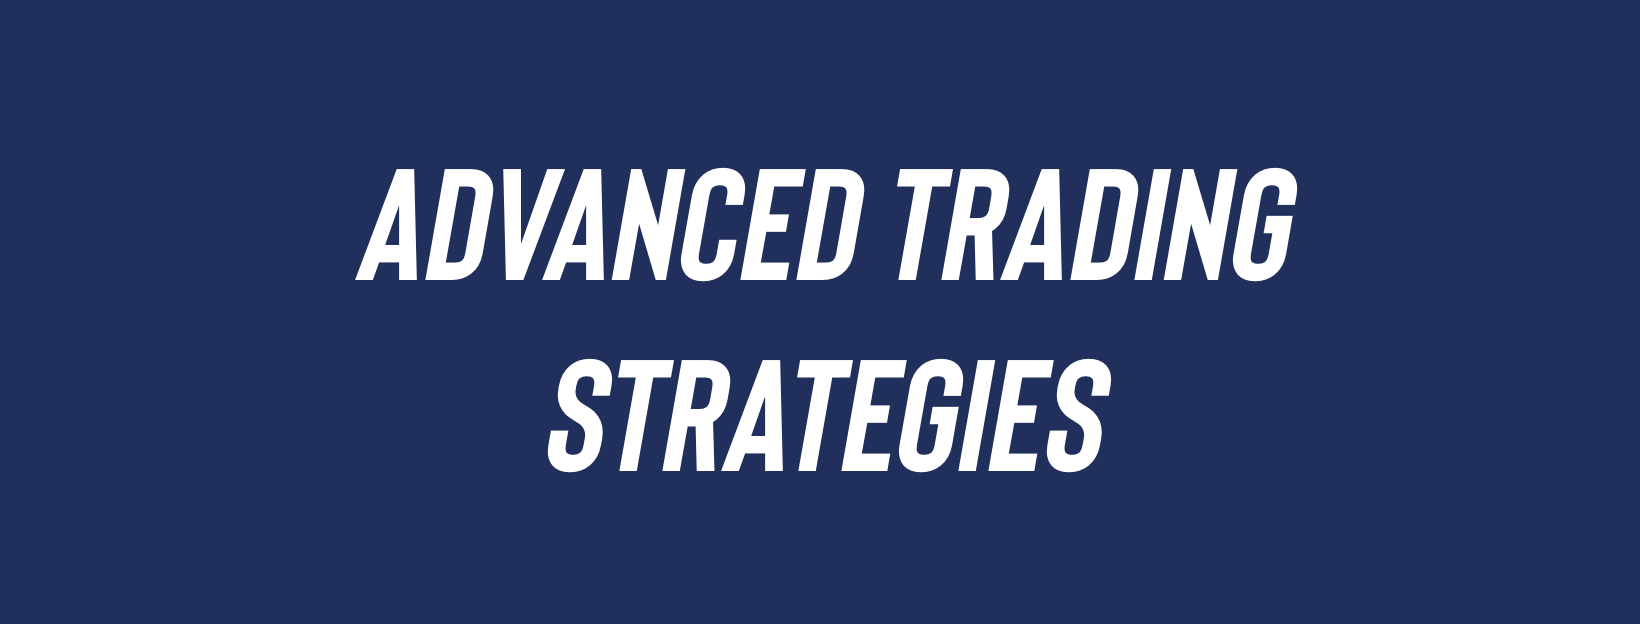 Advanced Trading Strategies: Maximizing Returns While Minimizing Risk